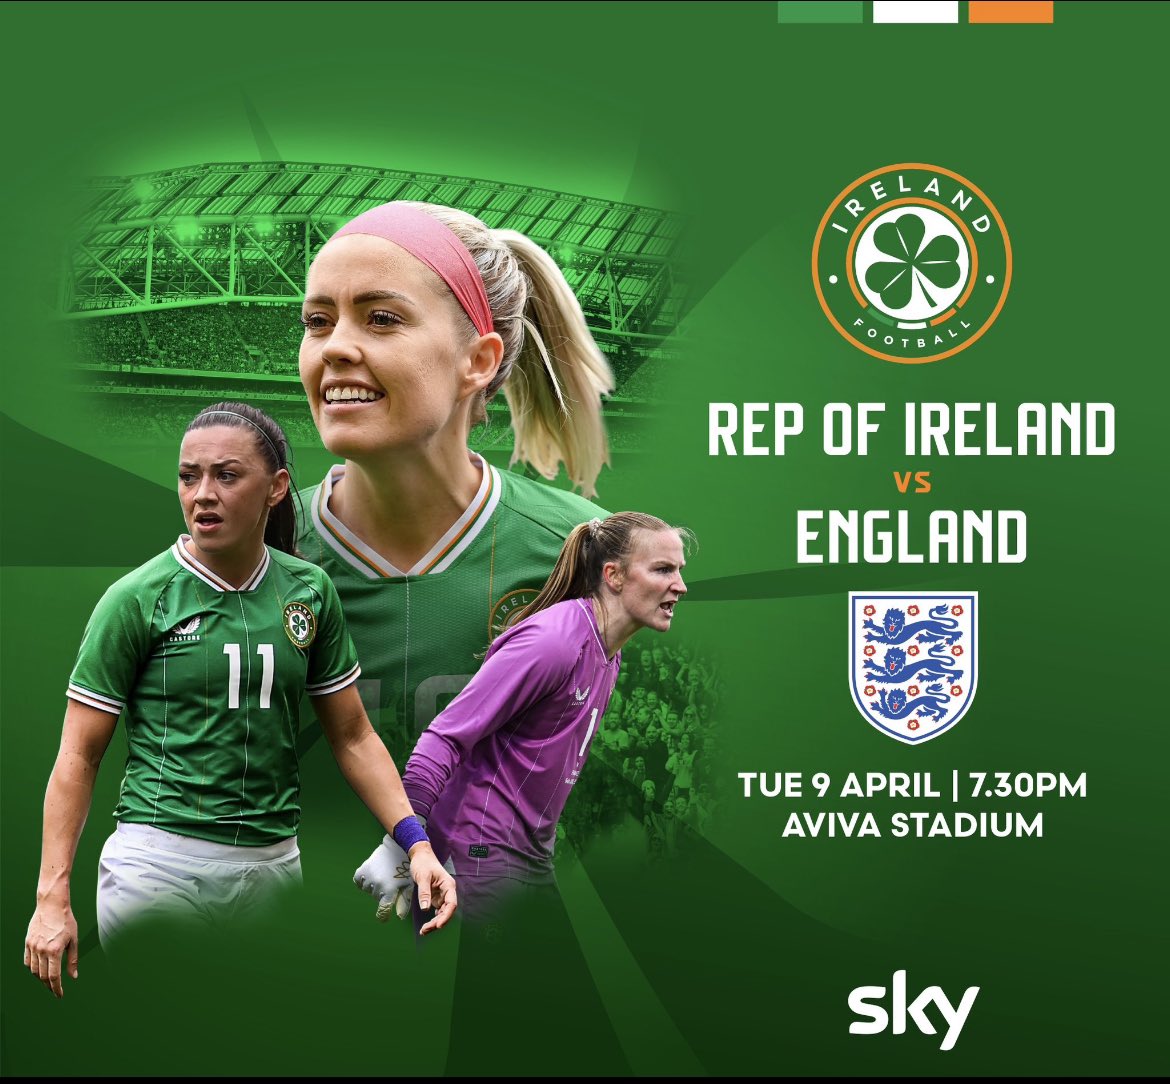 Republic of Ireland Women’s international team take on England in the Aviva Stadium on Tuesday night 🏟️ Come on you Girls in Green 🇮🇪☘️ @IrelandFootball #COYGIG